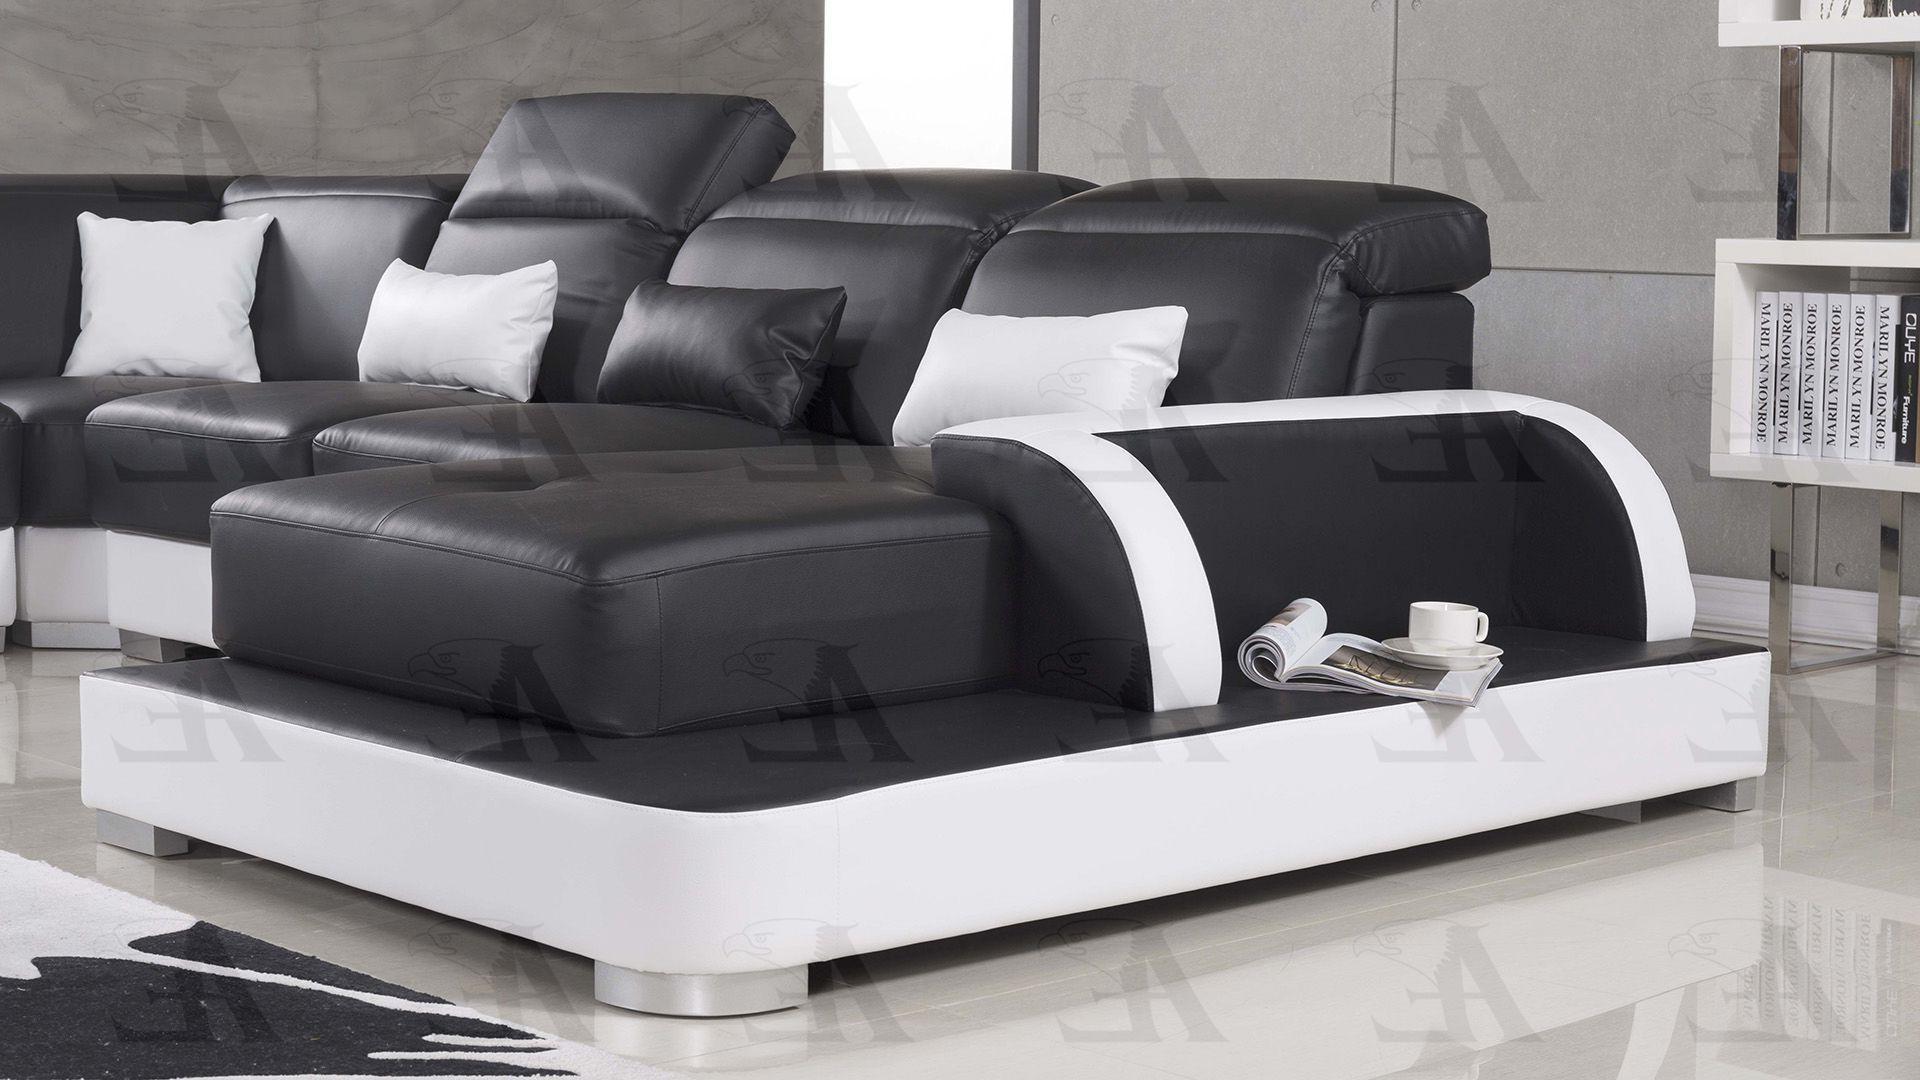 

                    
American Eagle Furniture AE-LD811-BK.W Sectional Sofa Set White/Black Bonded Leather Purchase 
